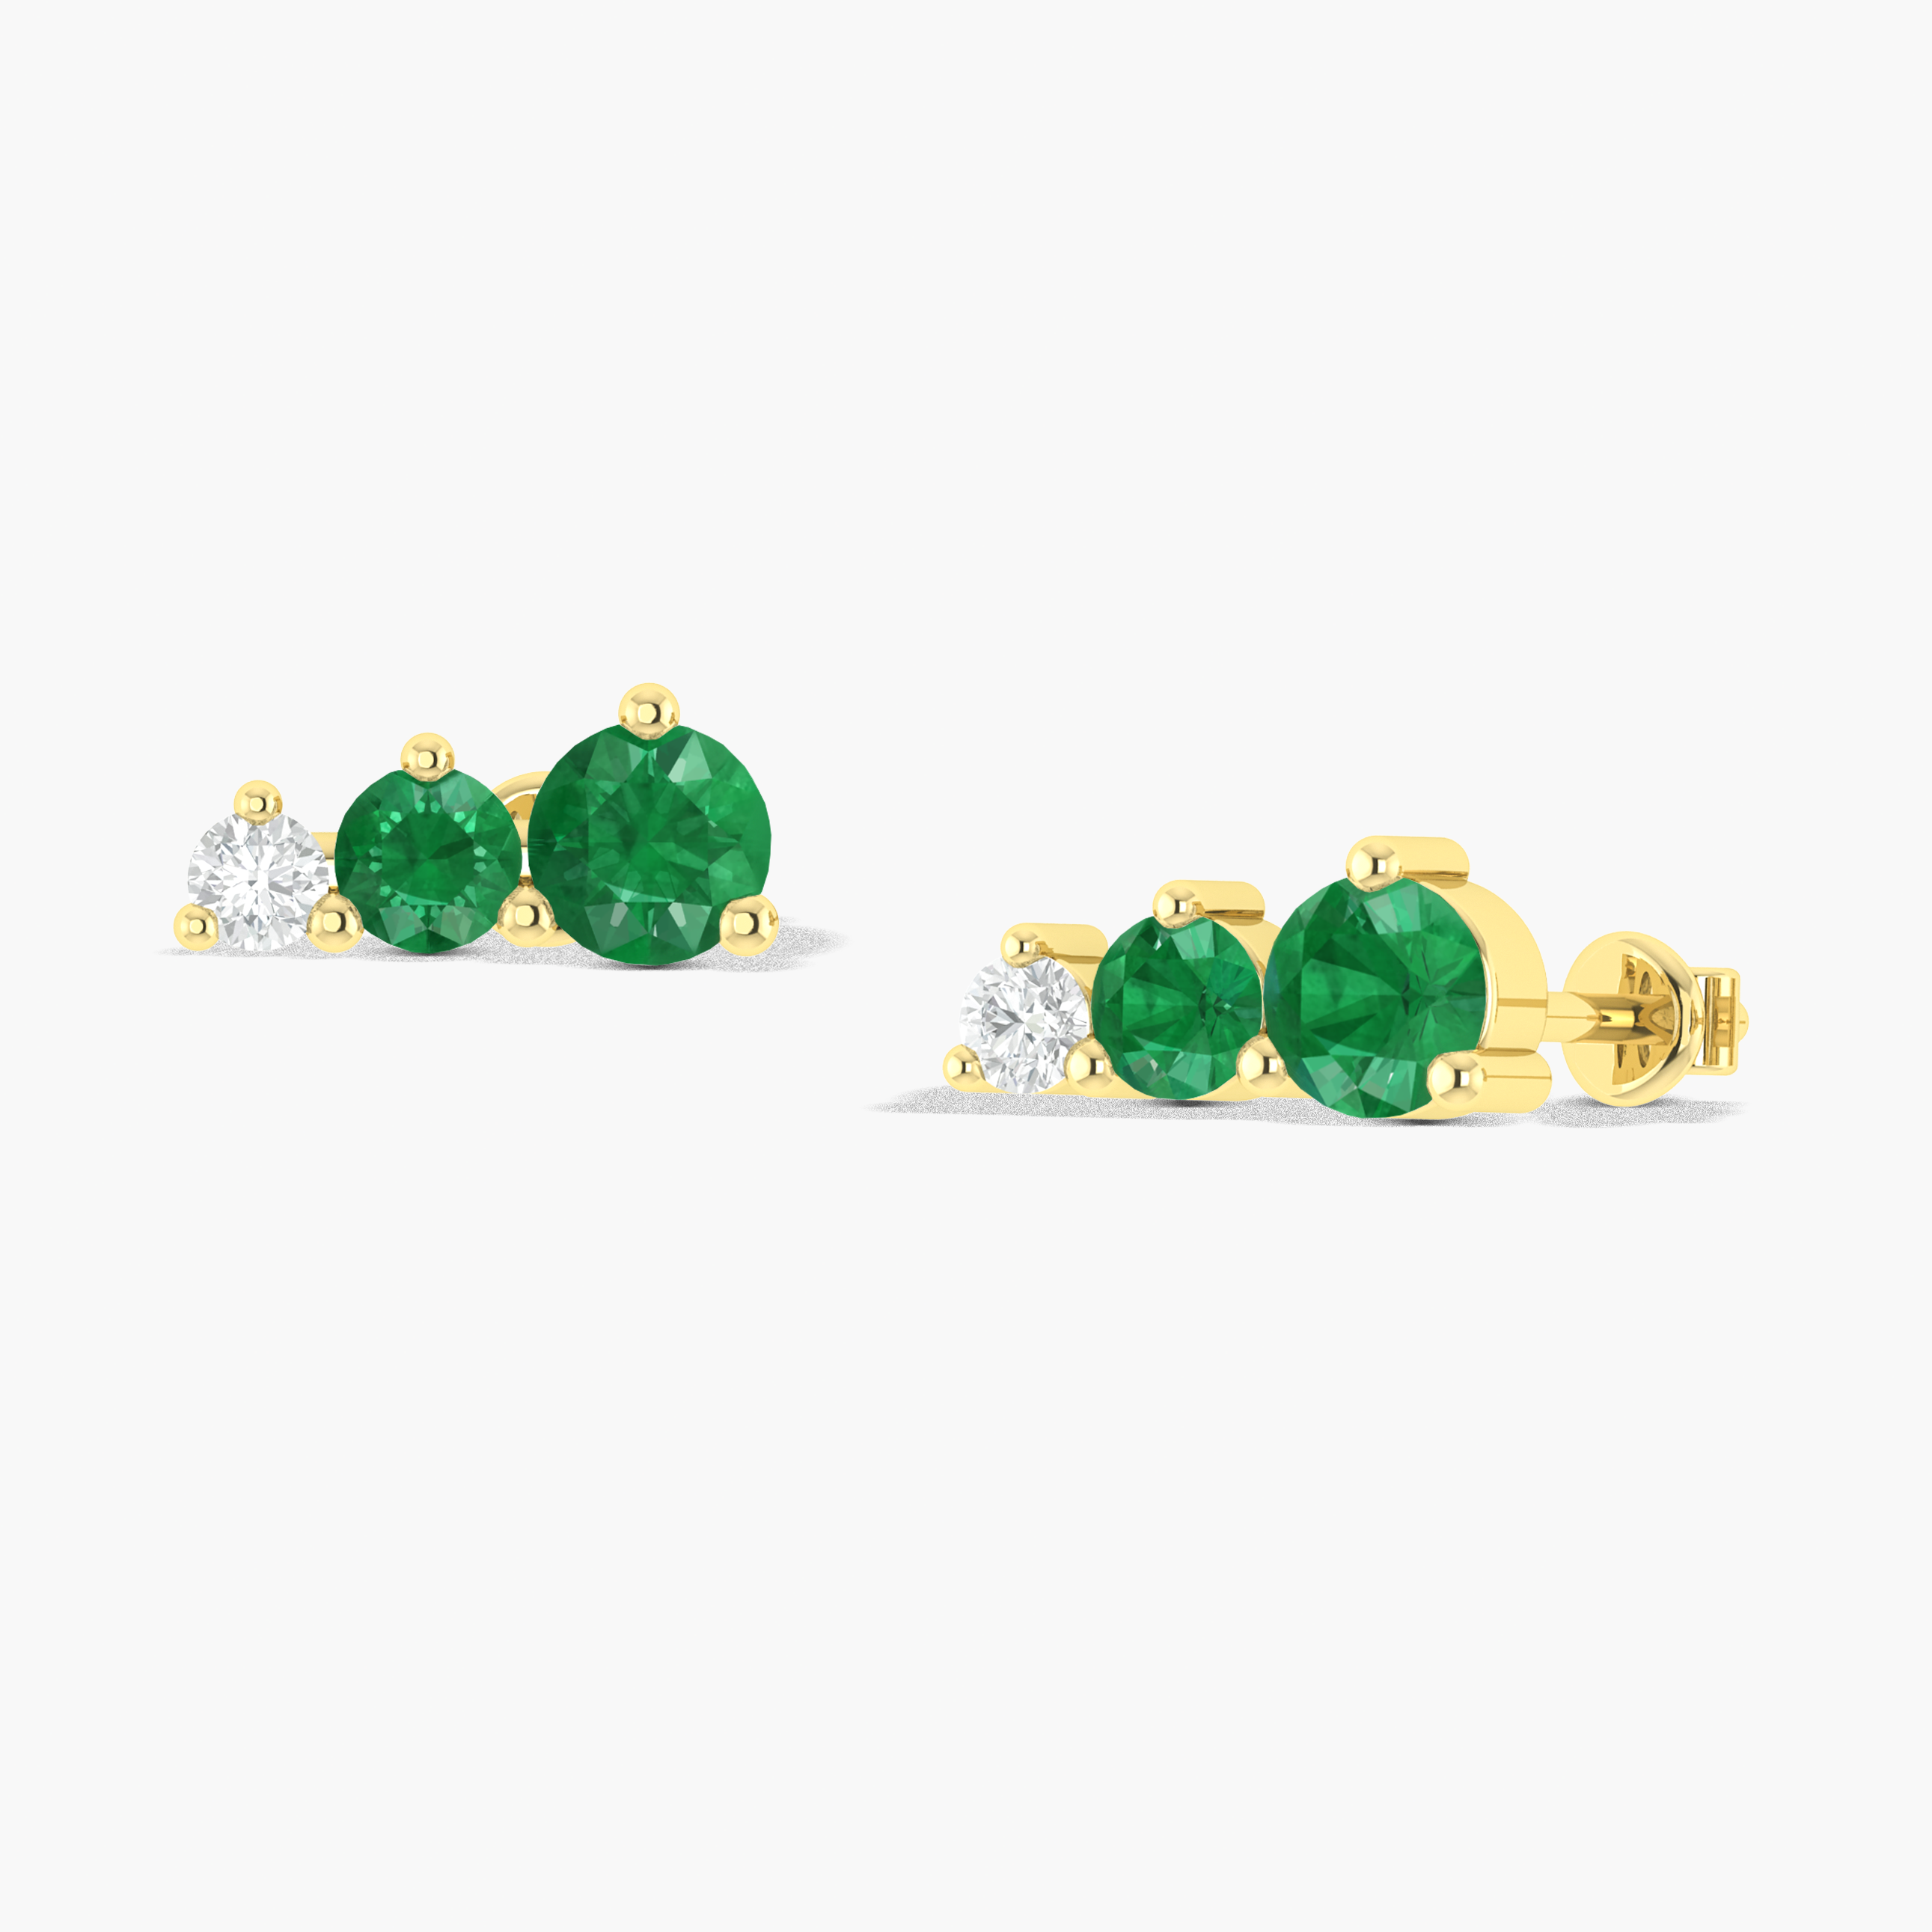 Green Emerald Jewelry